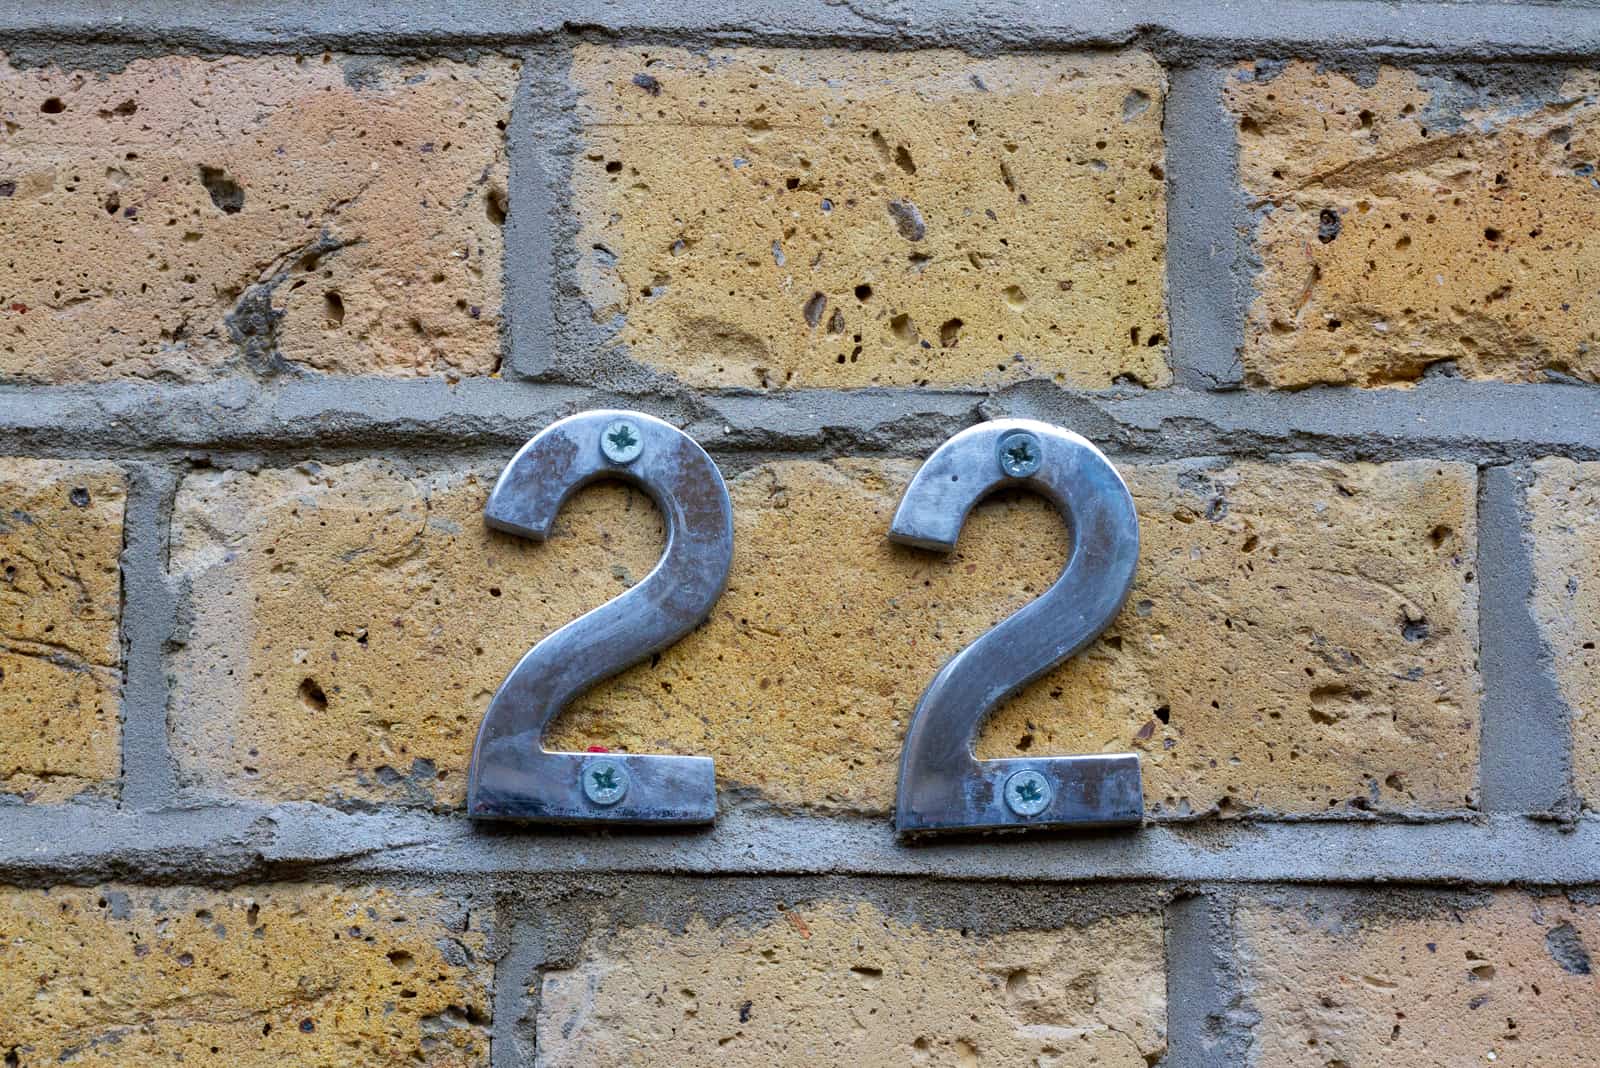 22 Bedeutung: Doppeltes Glück oder Pech?